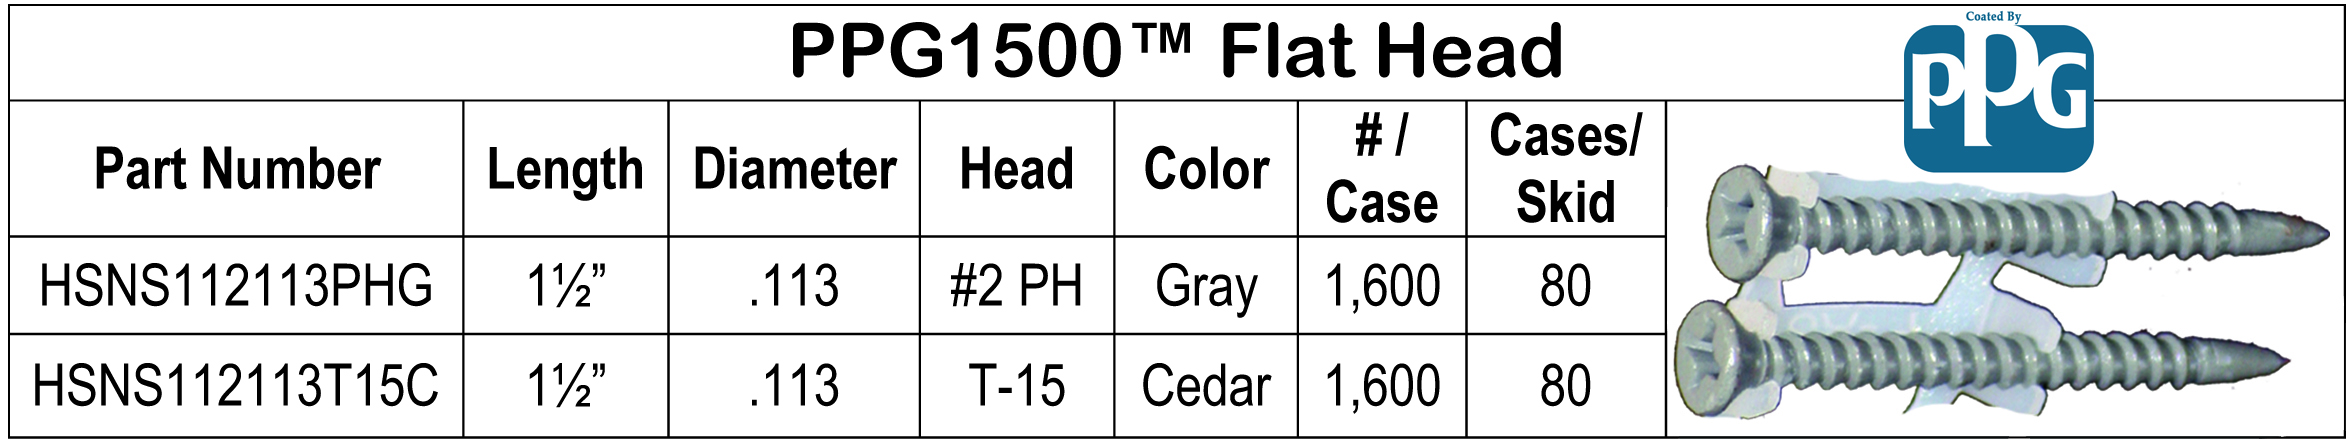 PPG1500 Flat Head Plastic Coil